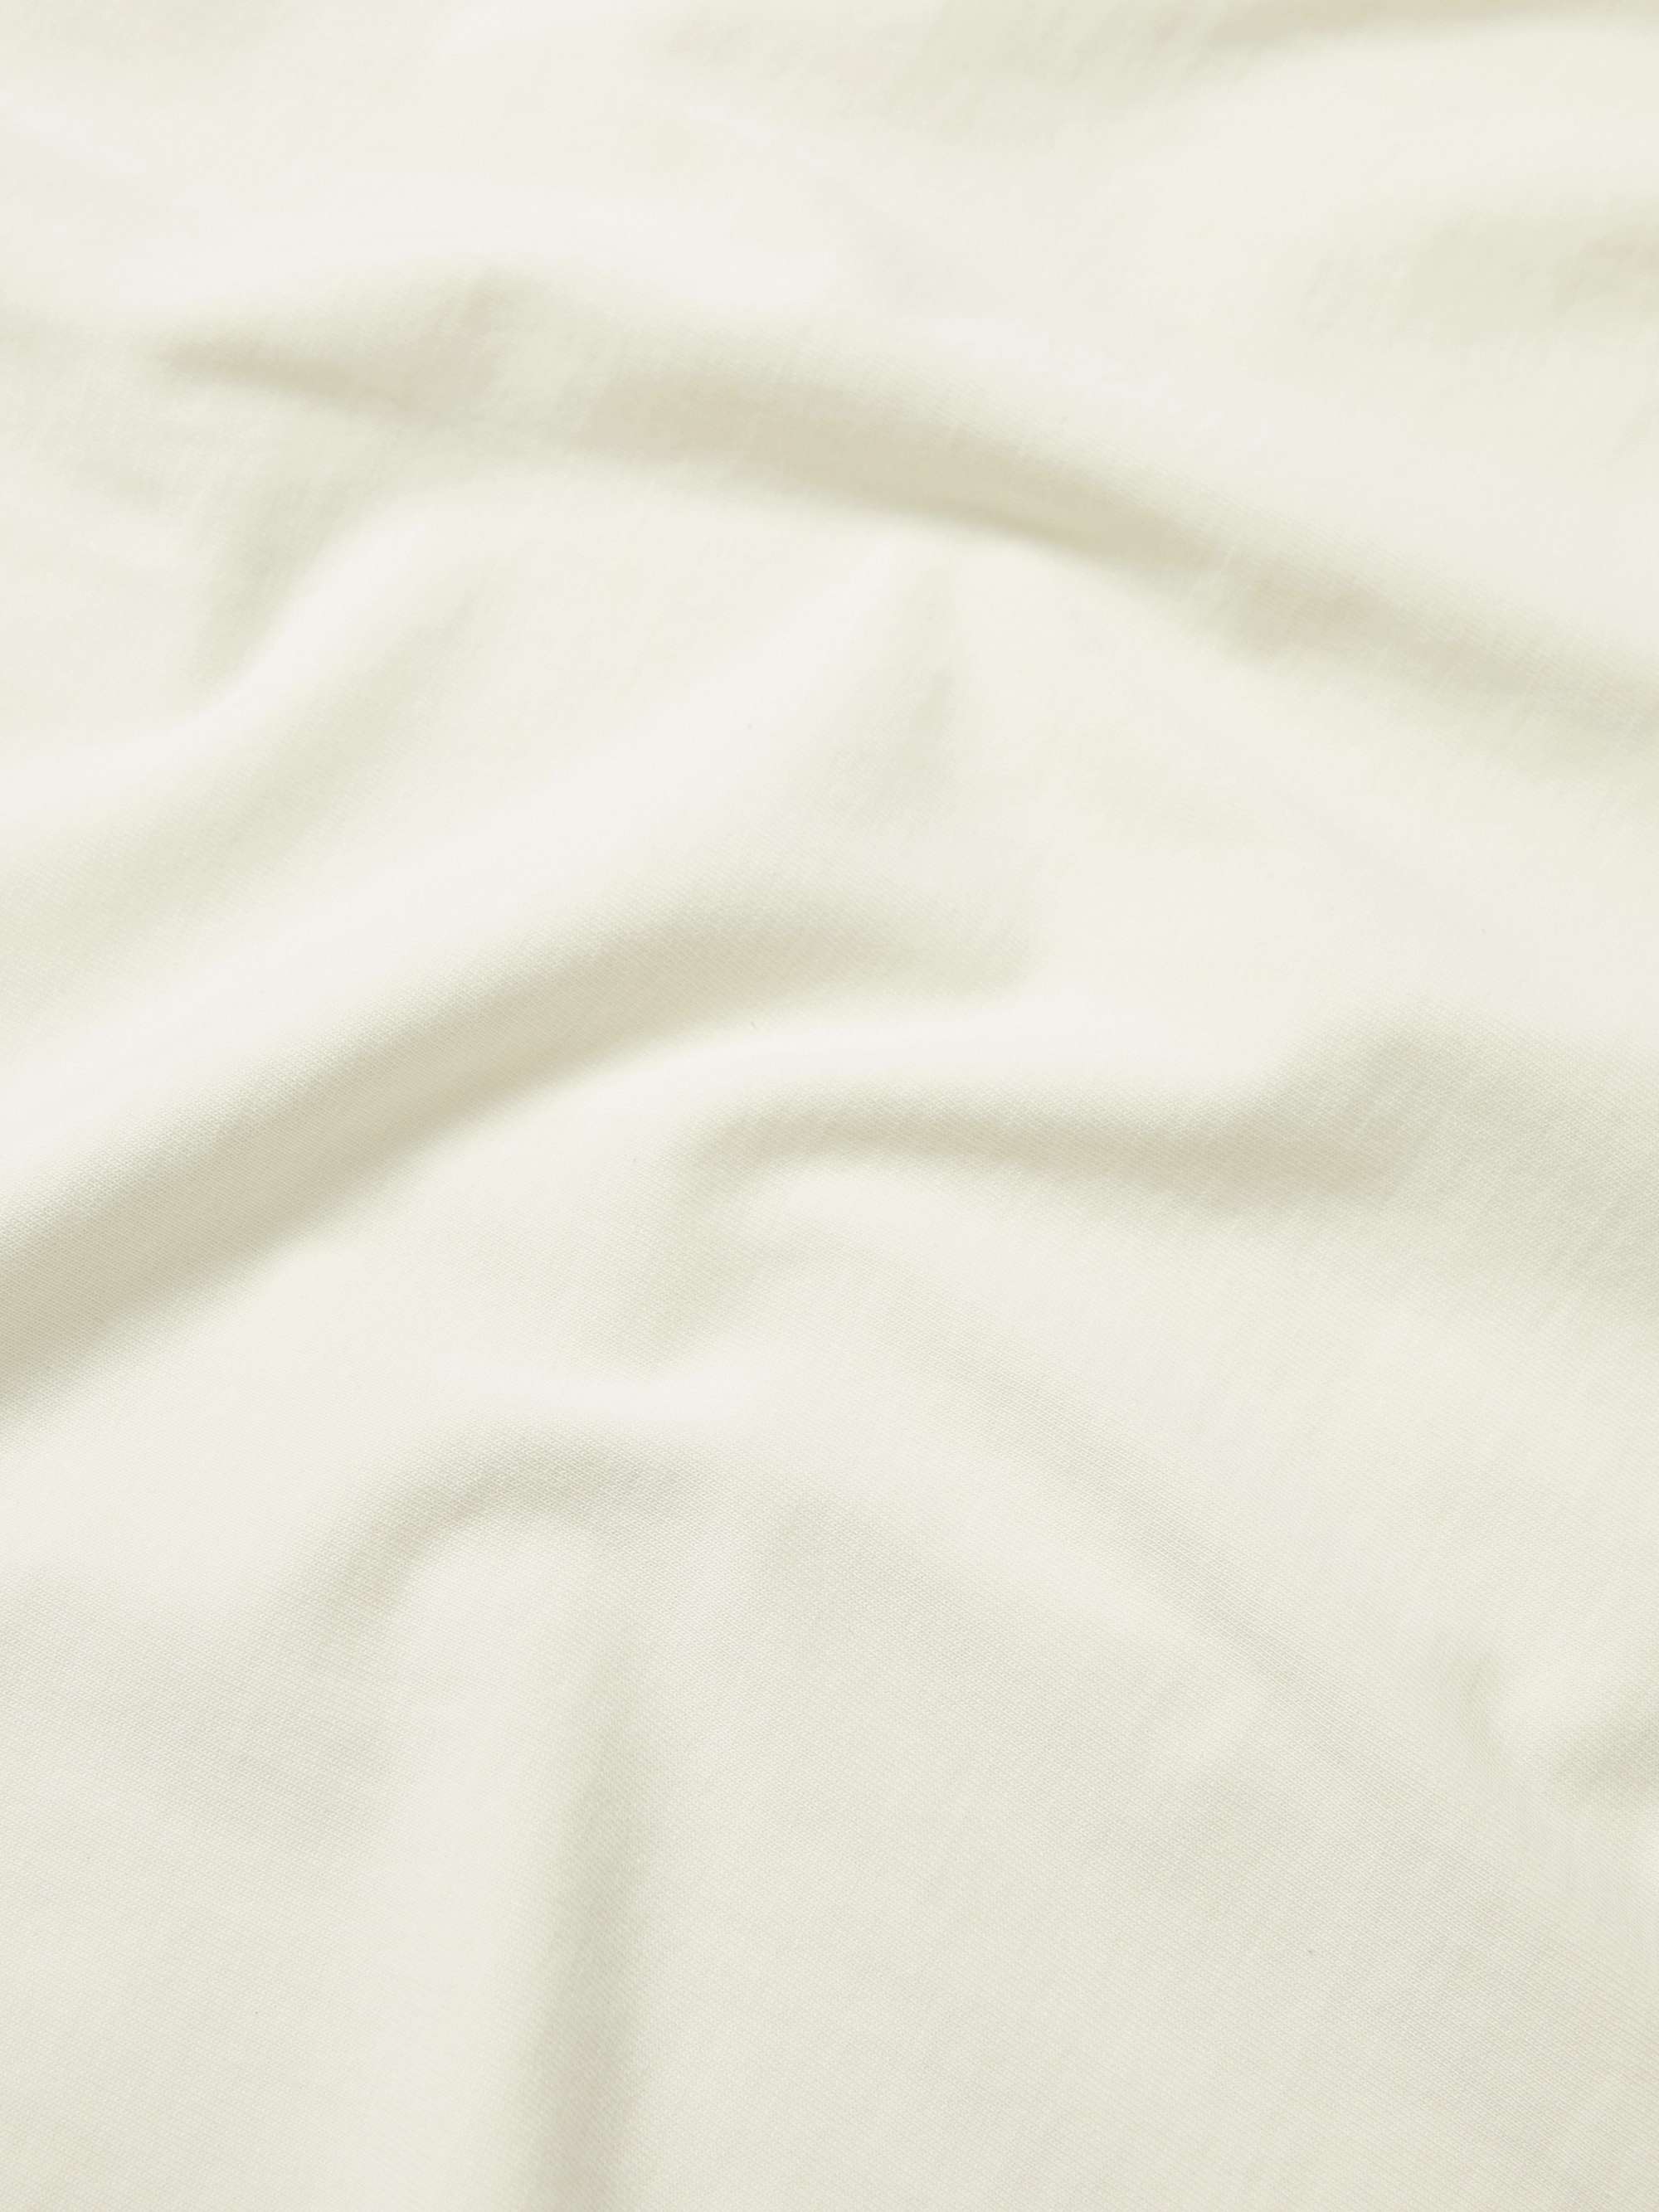 ONIA Garment-Dyed Cotton-Jersey T-Shirt